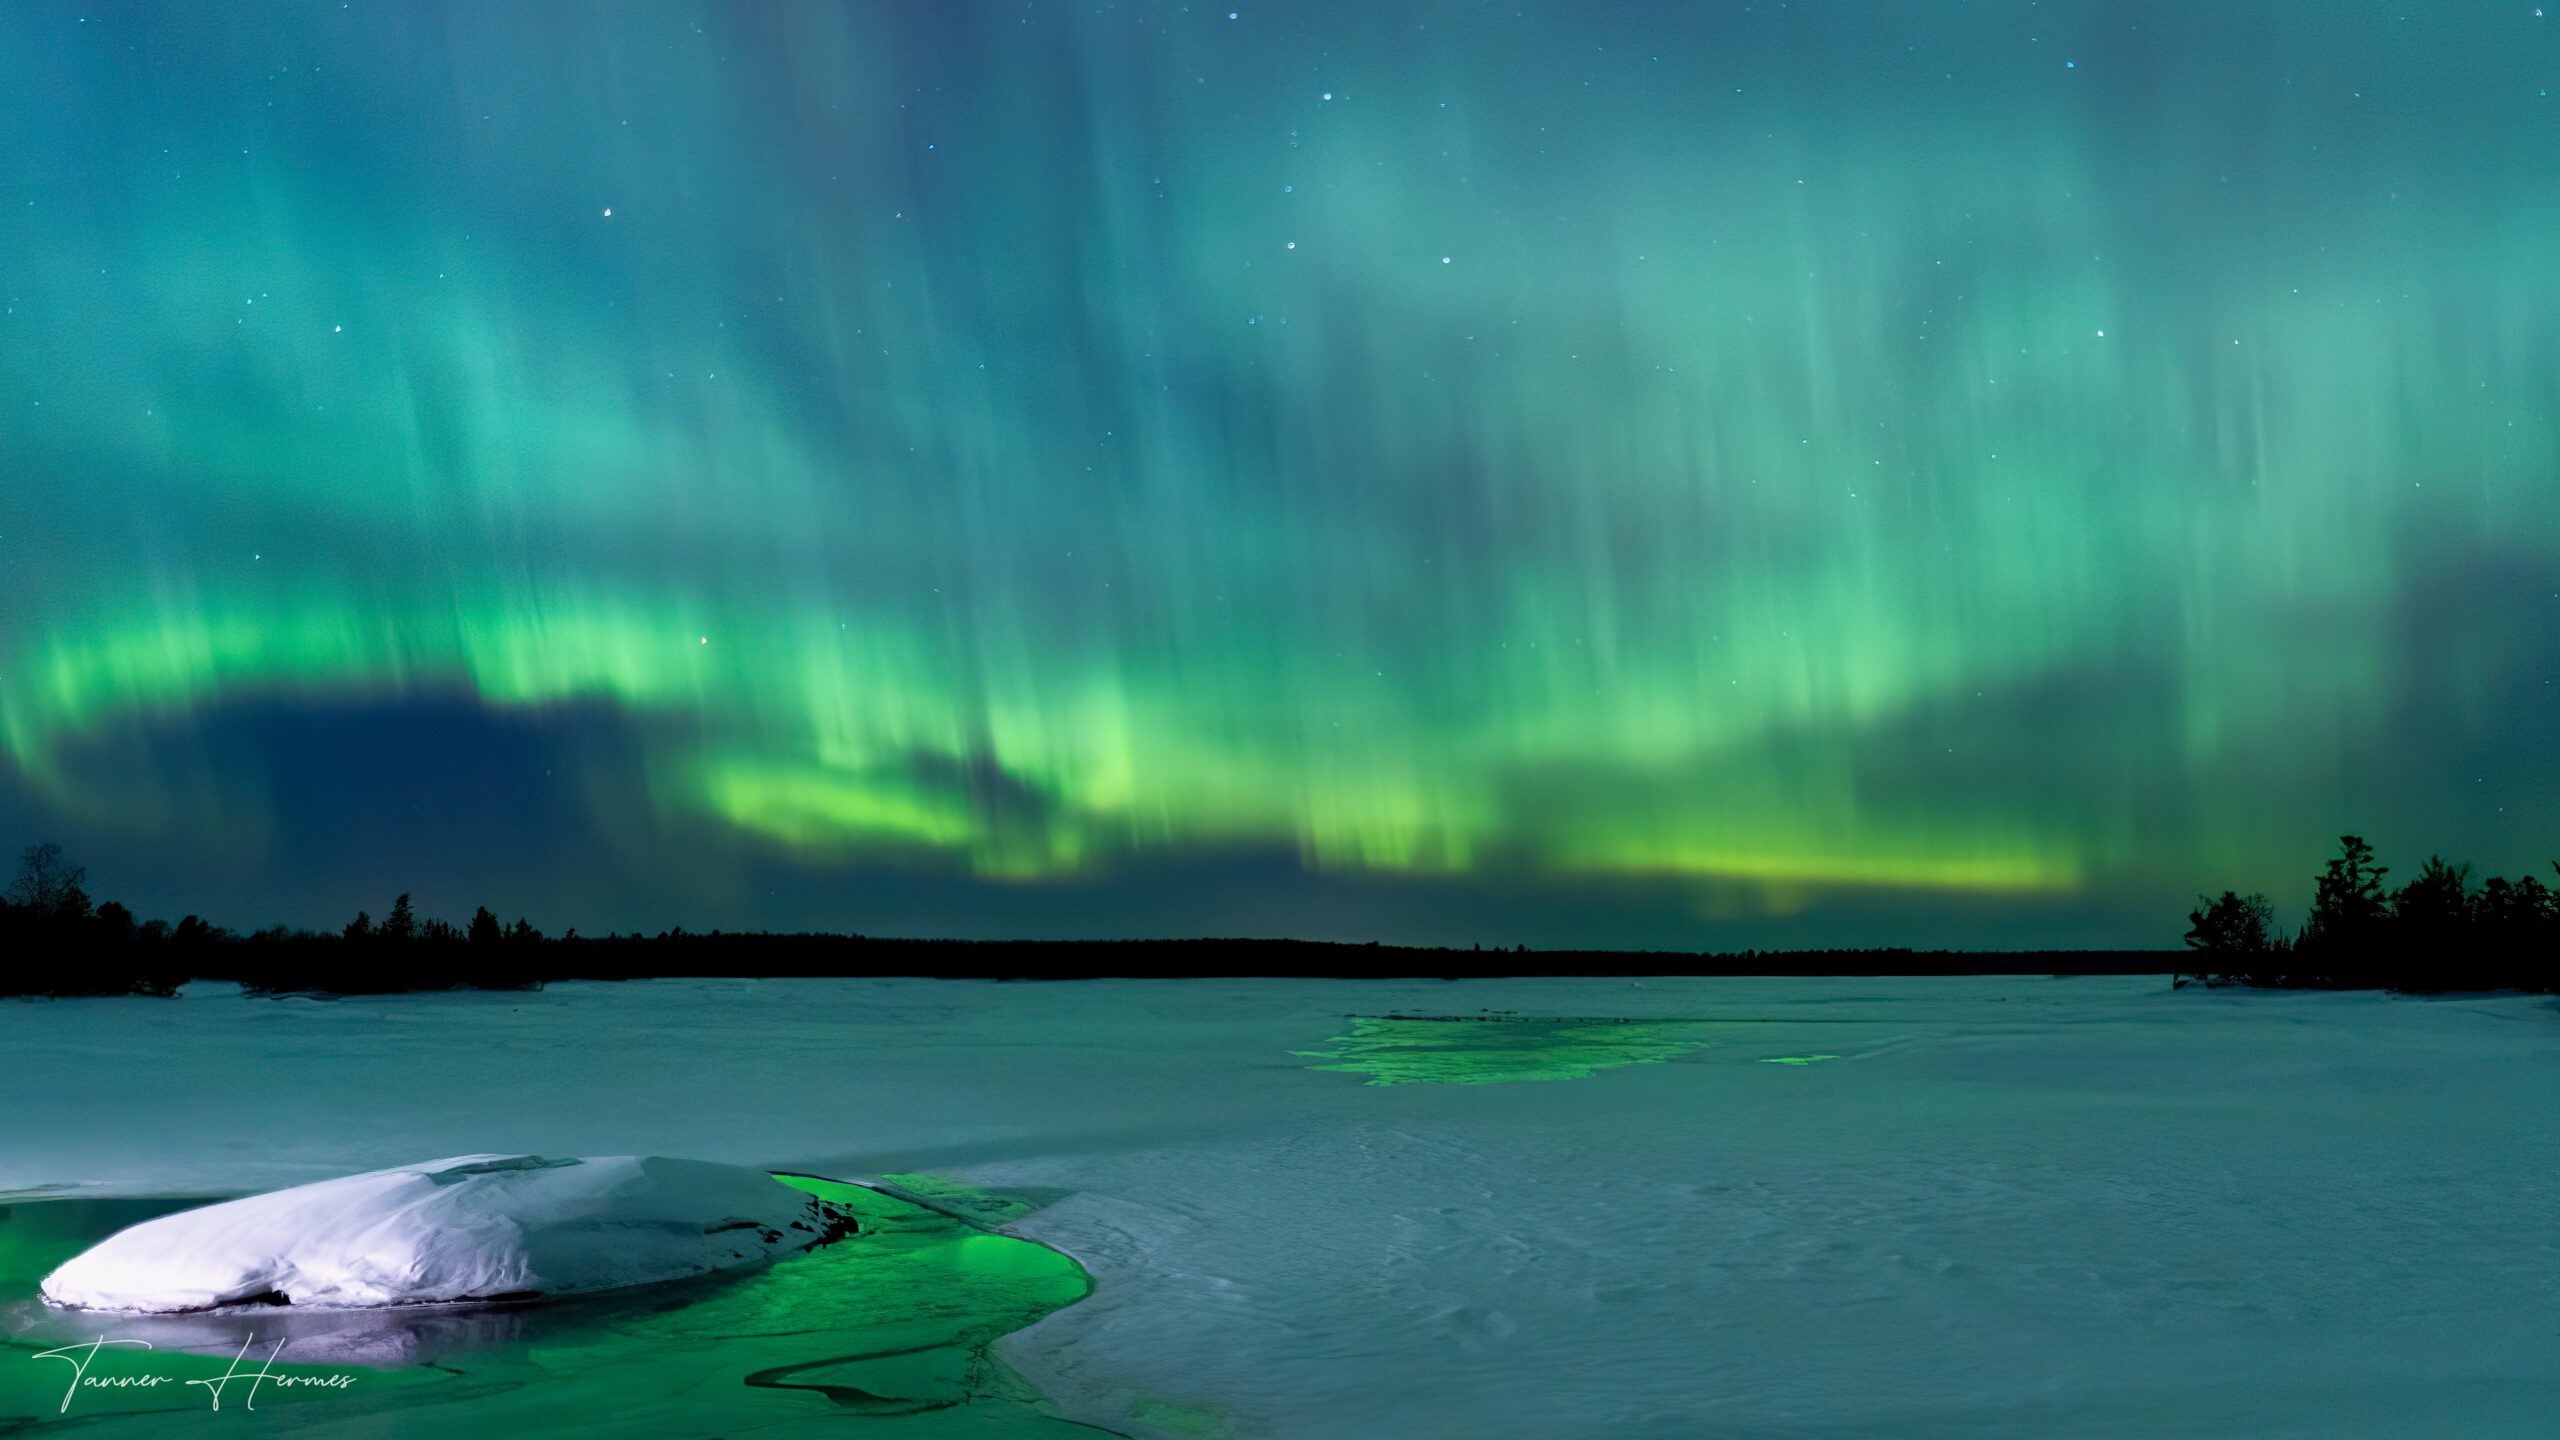 The aurora shining over a frozen lake